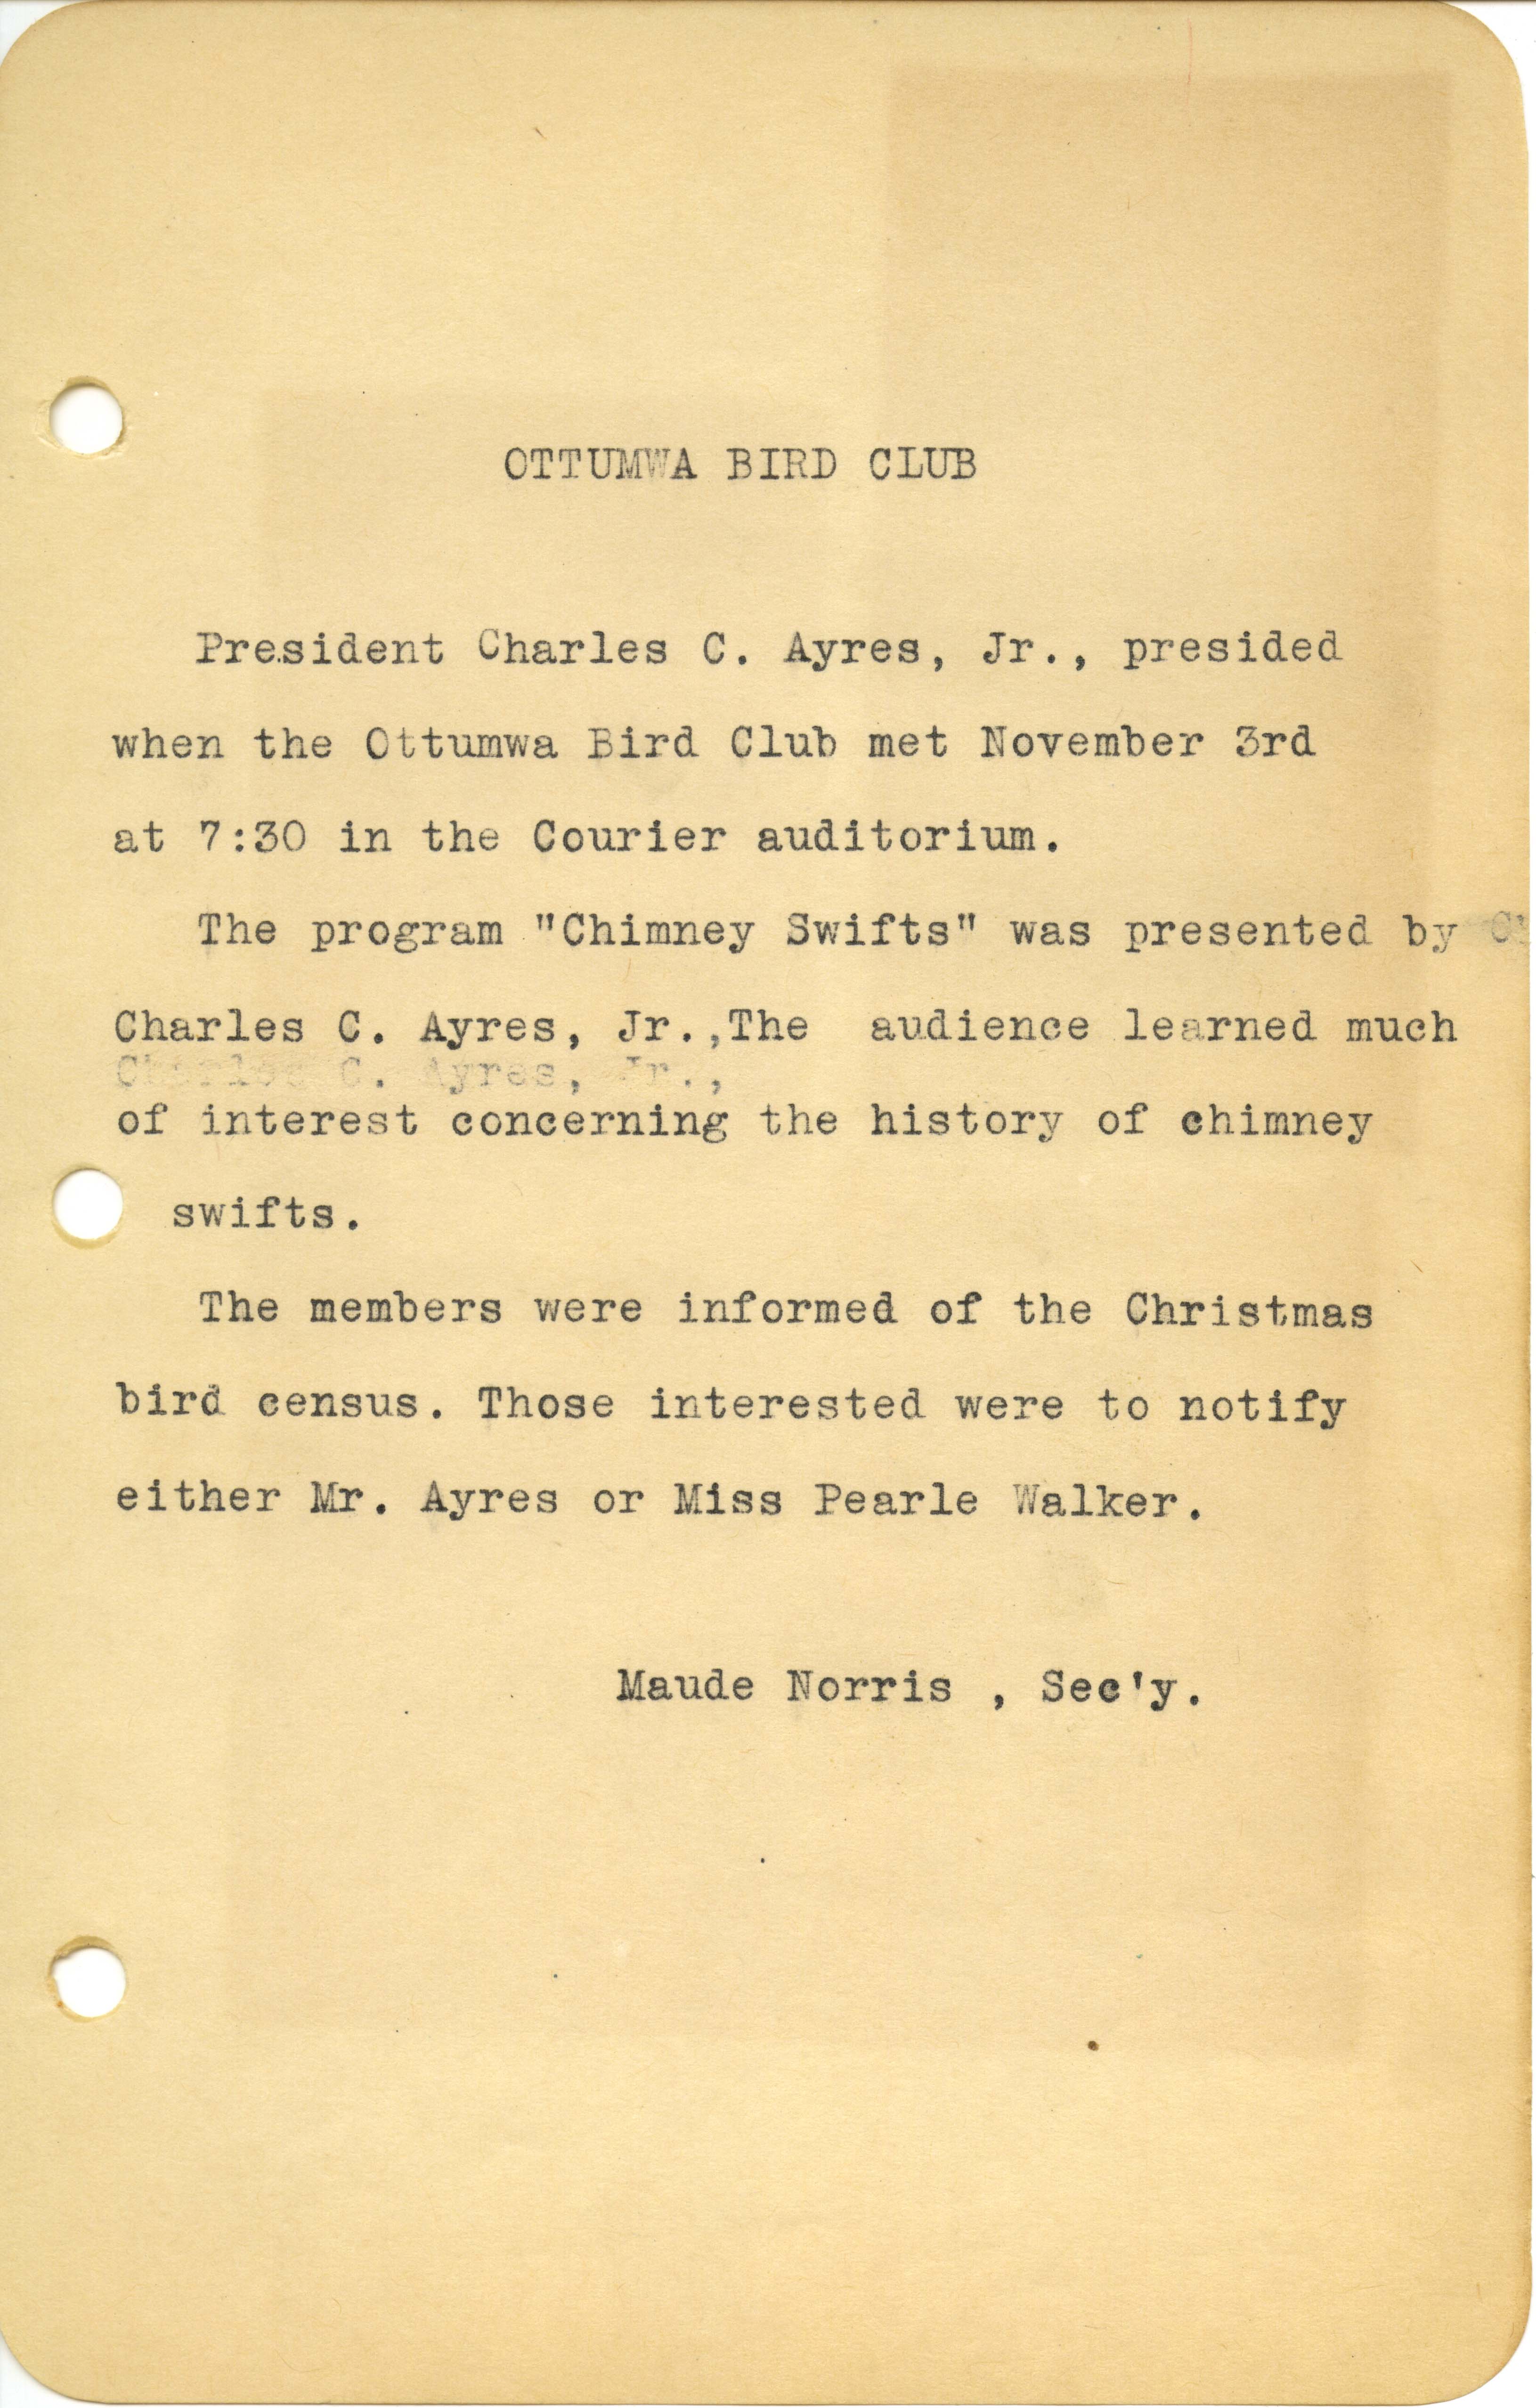  Ottumwa Bird Club meeting minutes, November 3, 1944